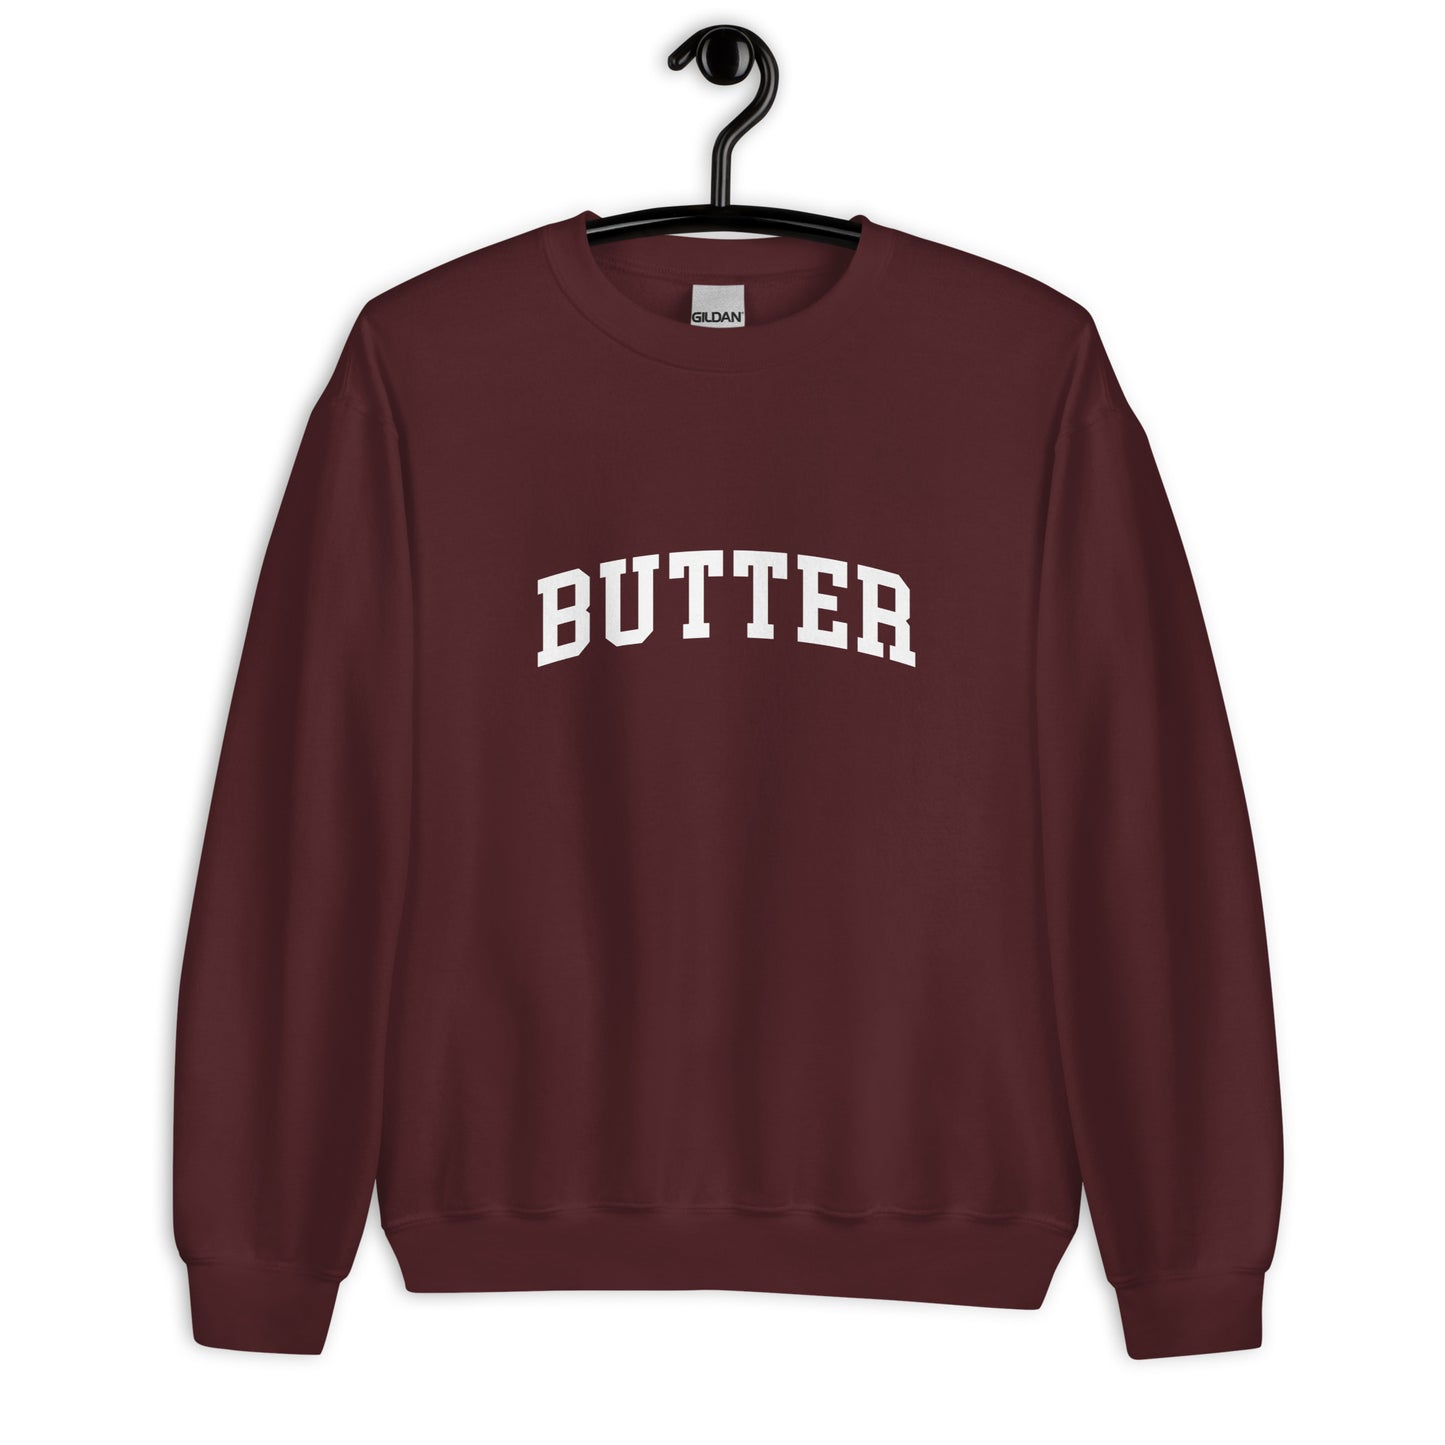 Butter Sweatshirt - Arched Font